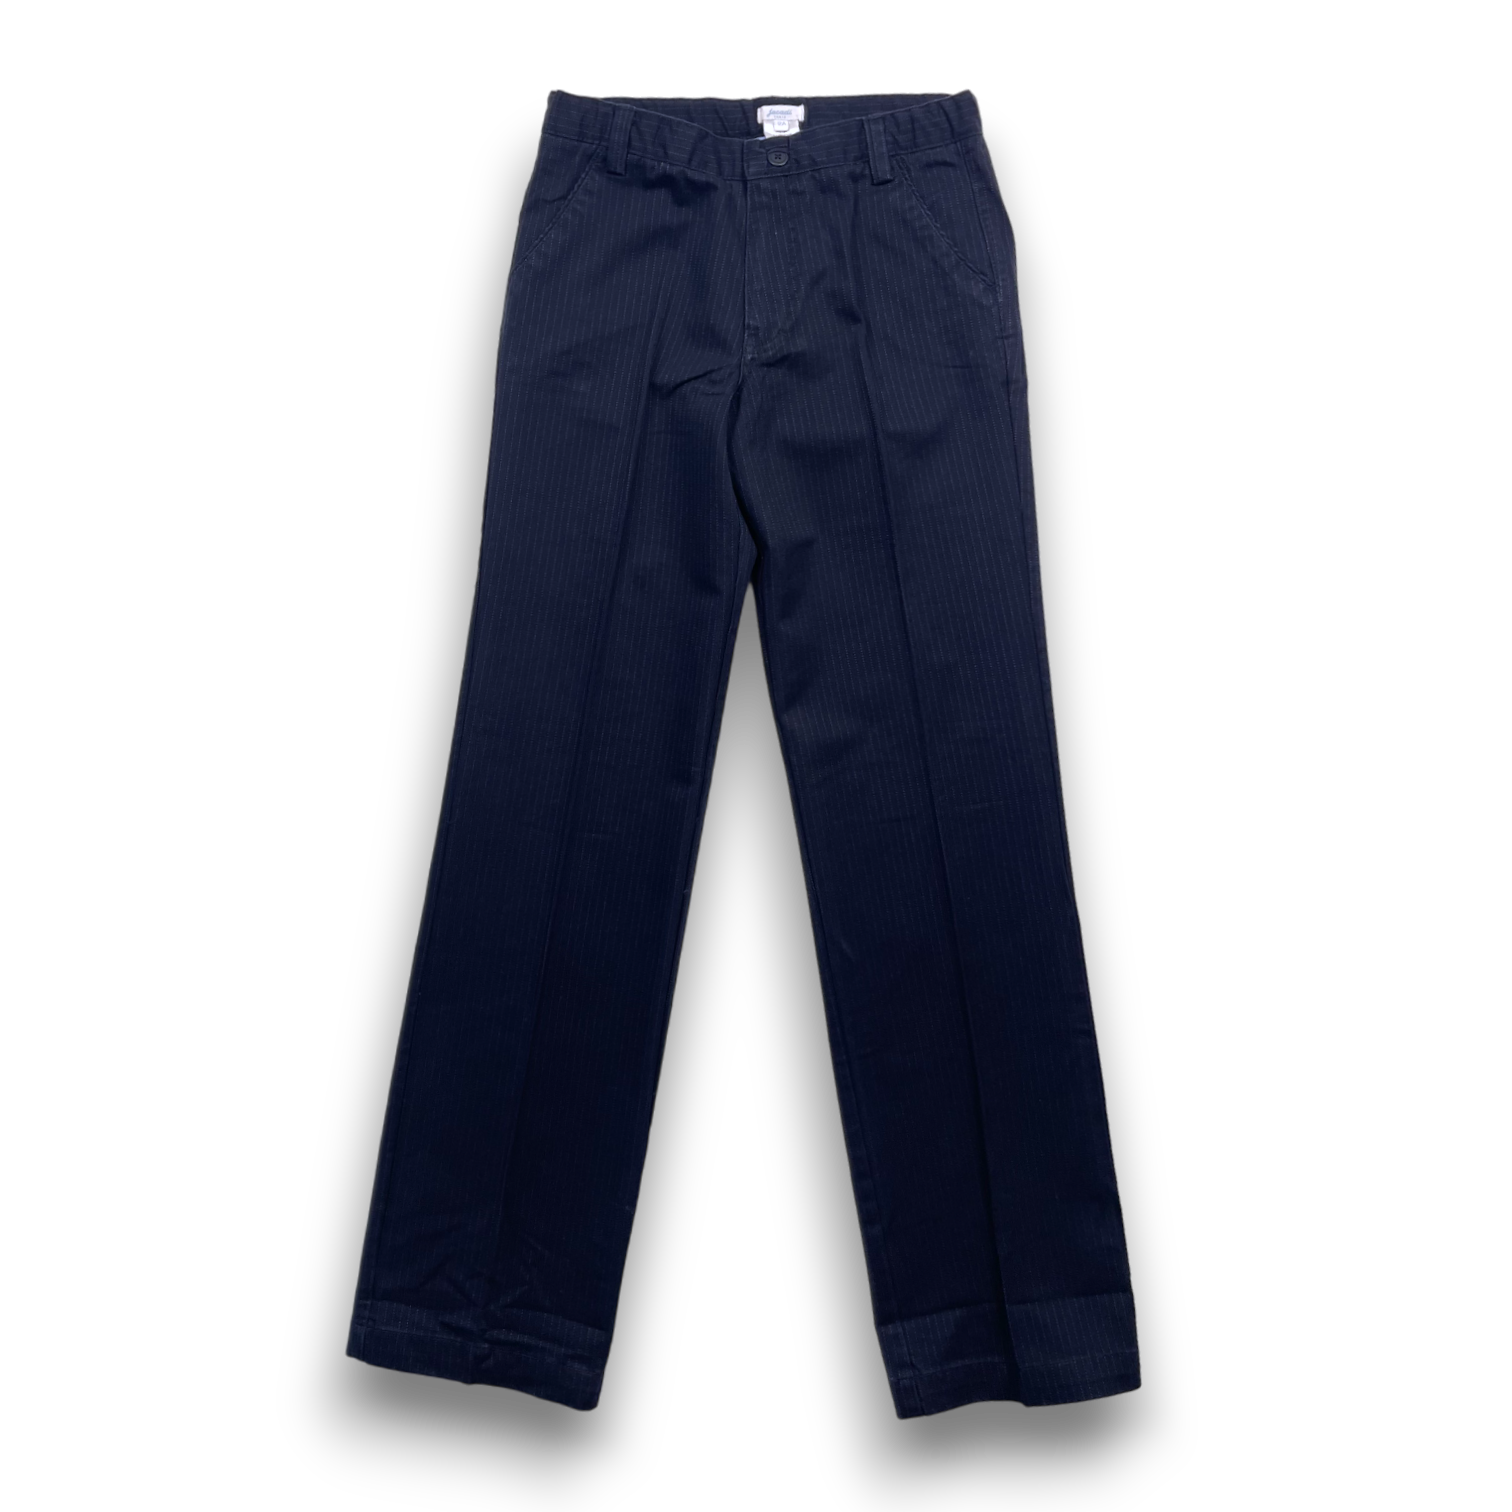 JACADI - Pantalon de costume droit bleu marine à rayures - 12 ans